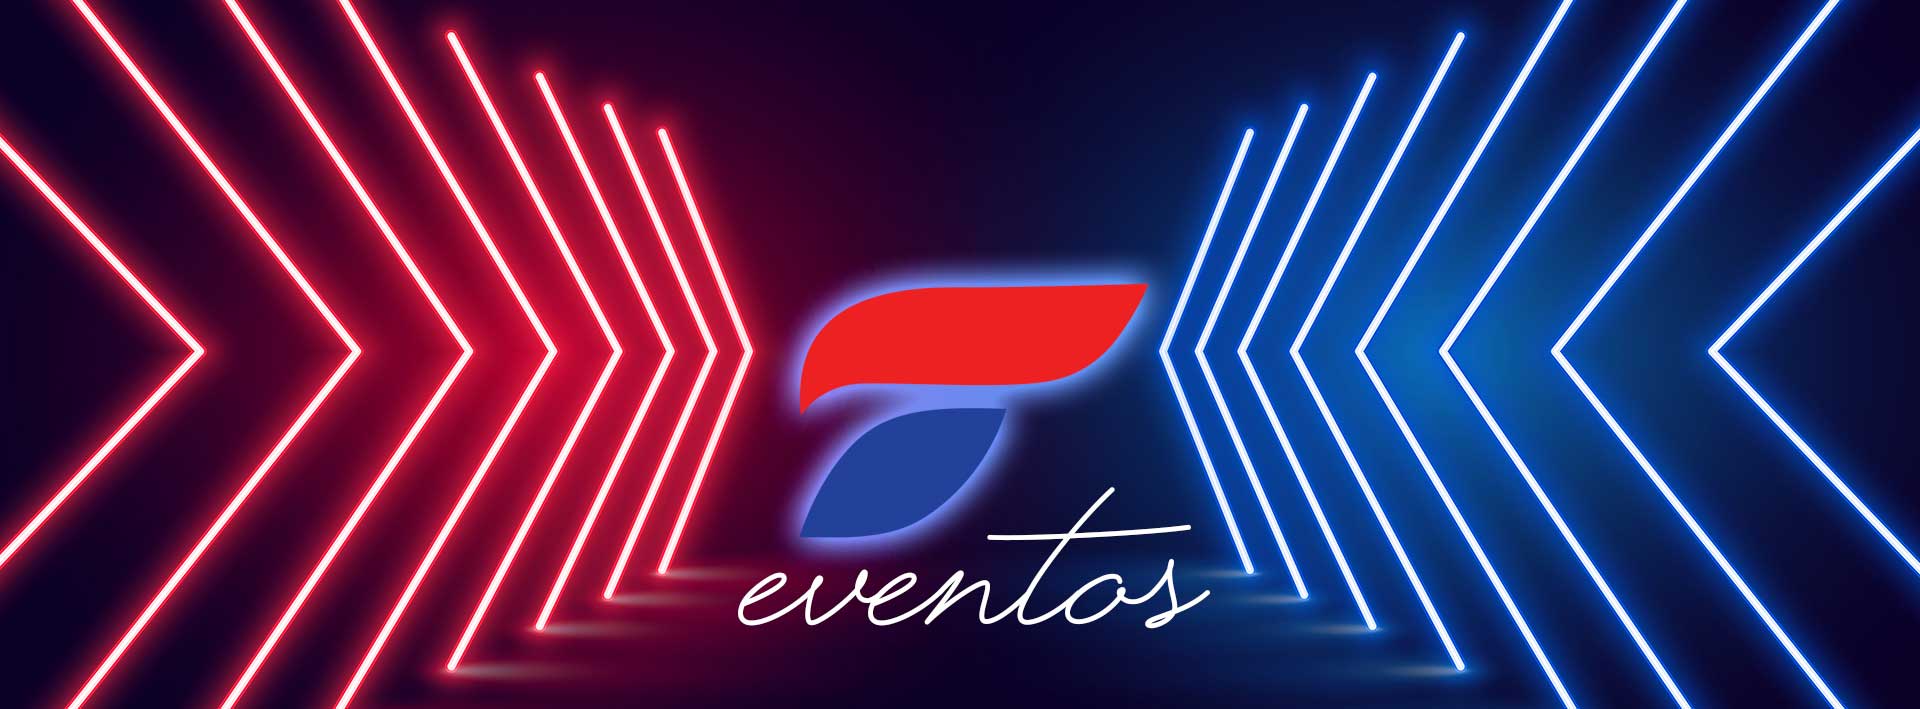 Banner-Eventos-Super-Telemaco